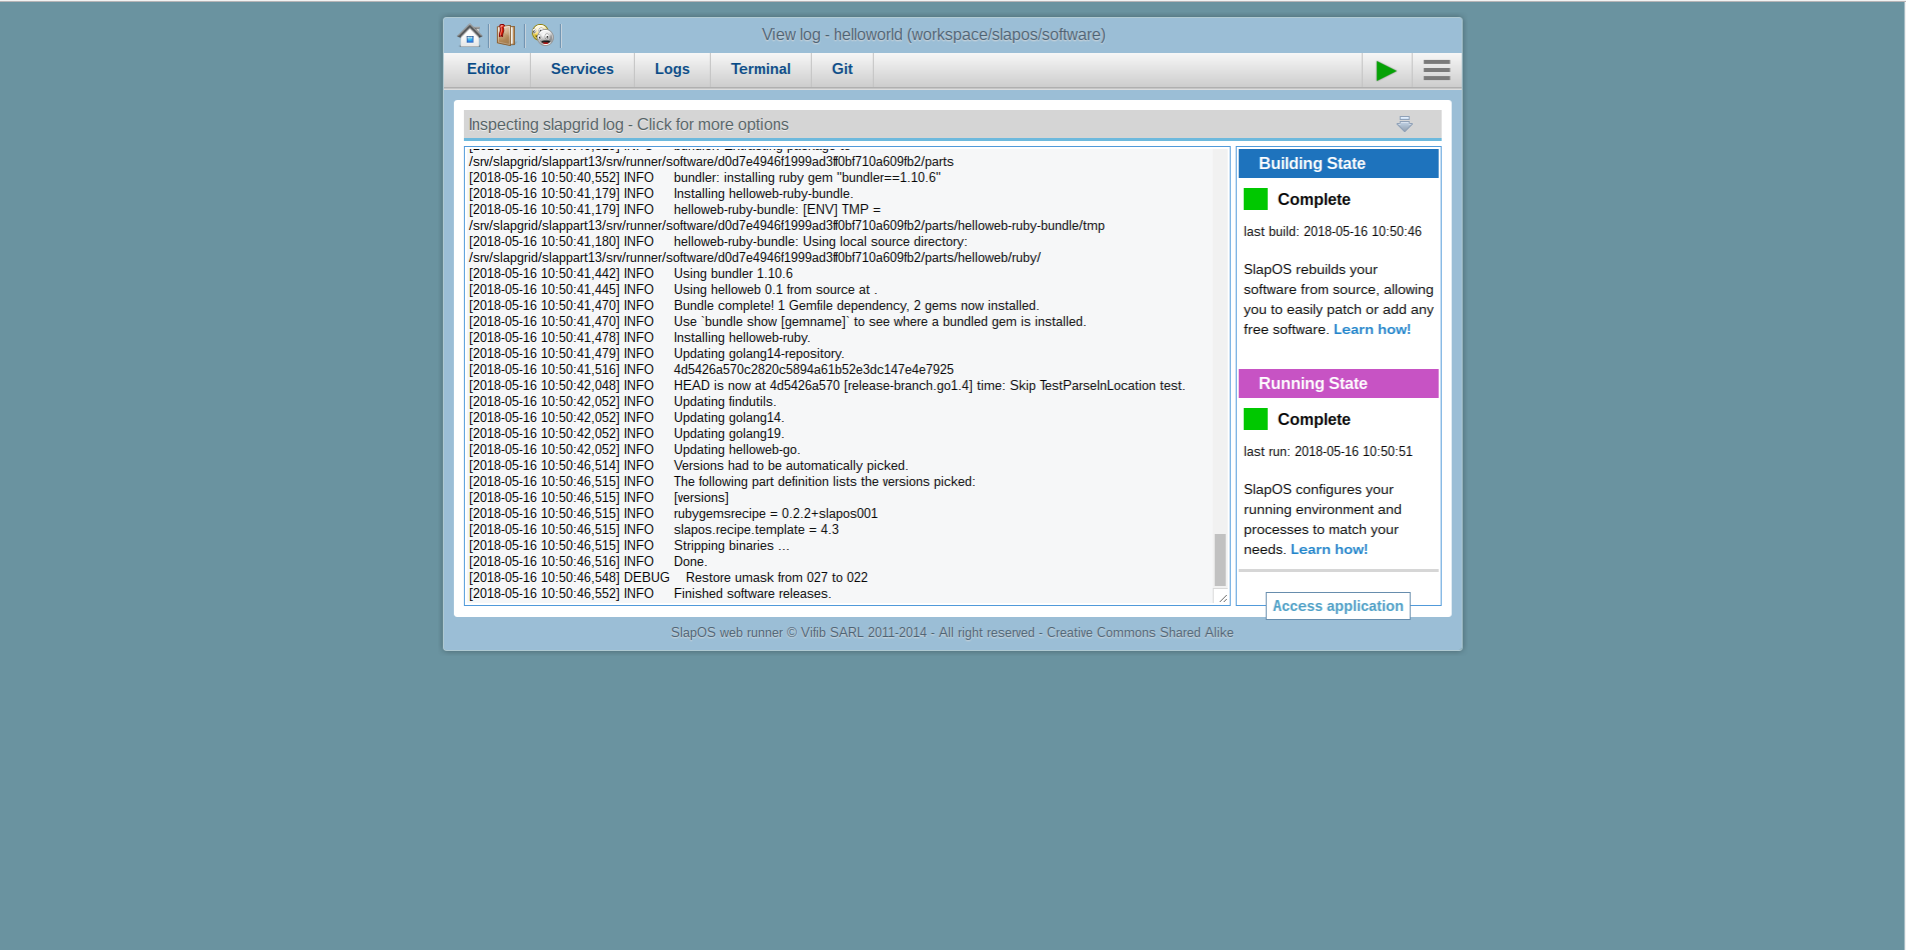 Extending Software Release - Webrunner Interface - Software Rebuild Completed